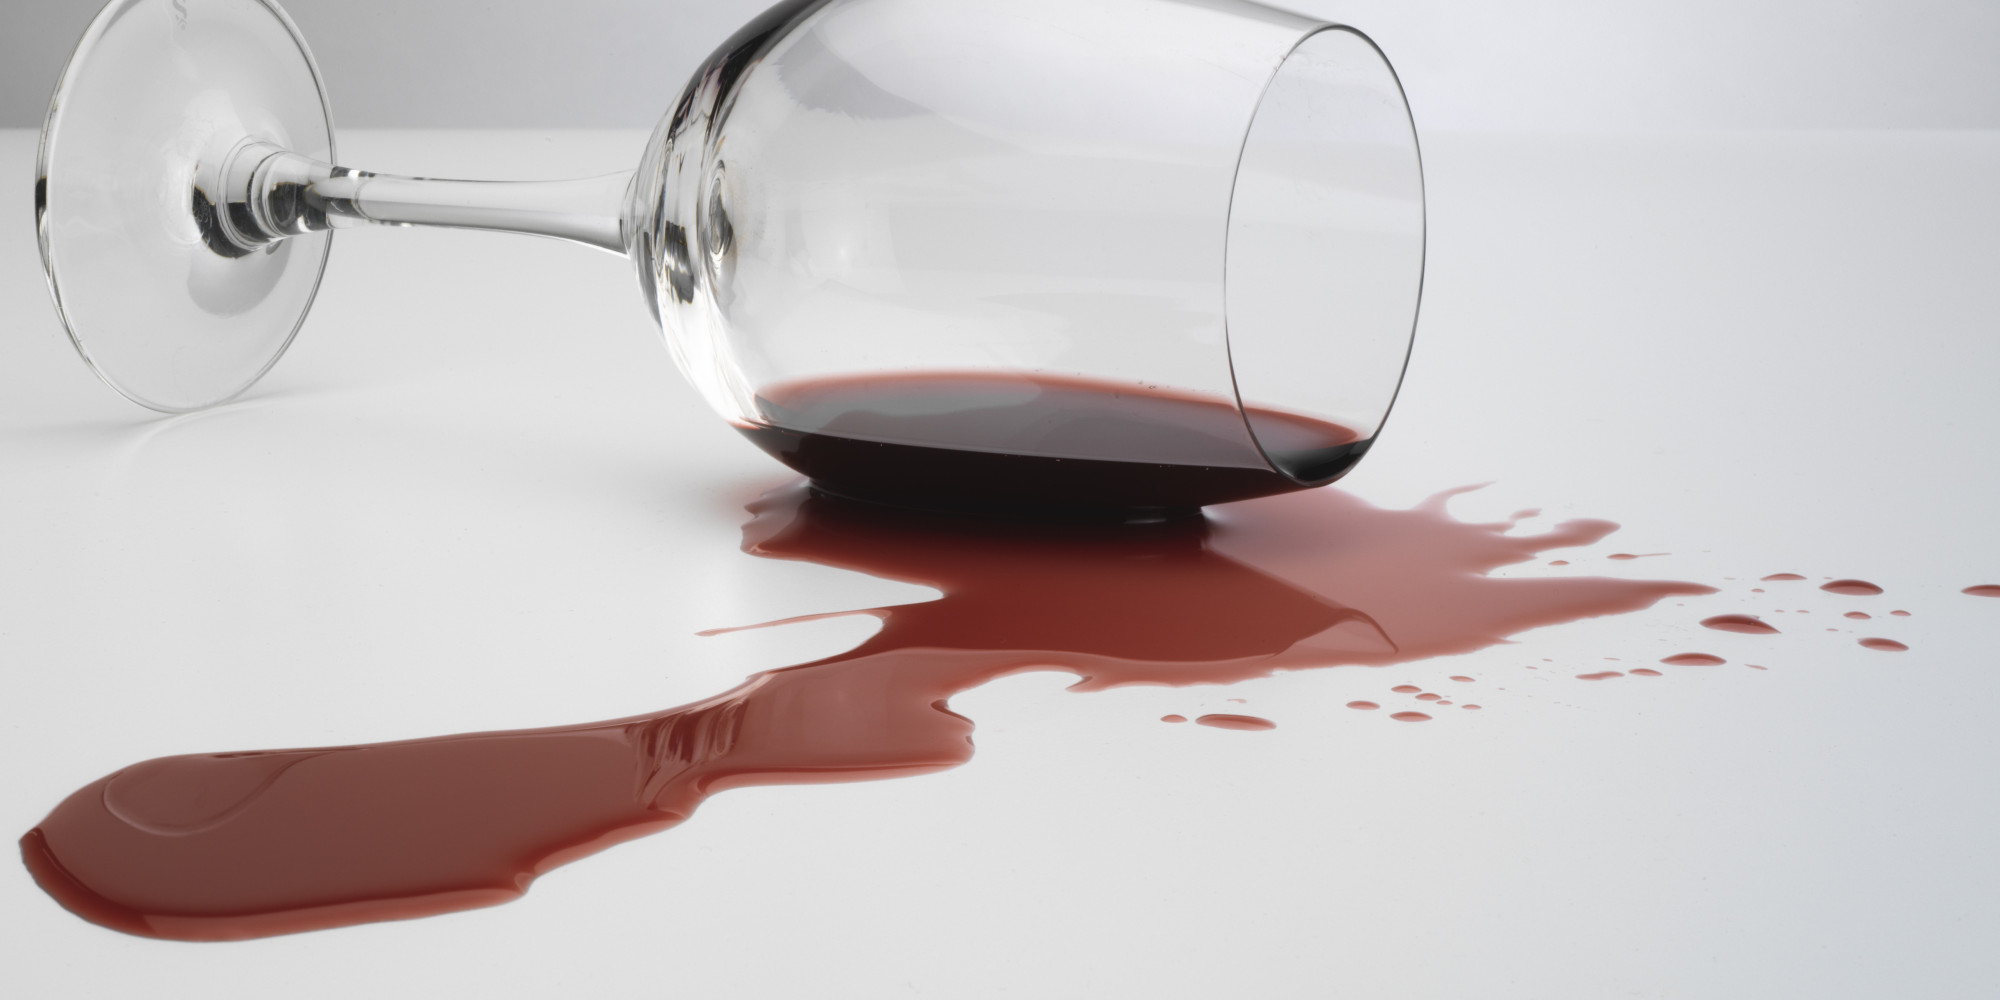 Spilled wine photo